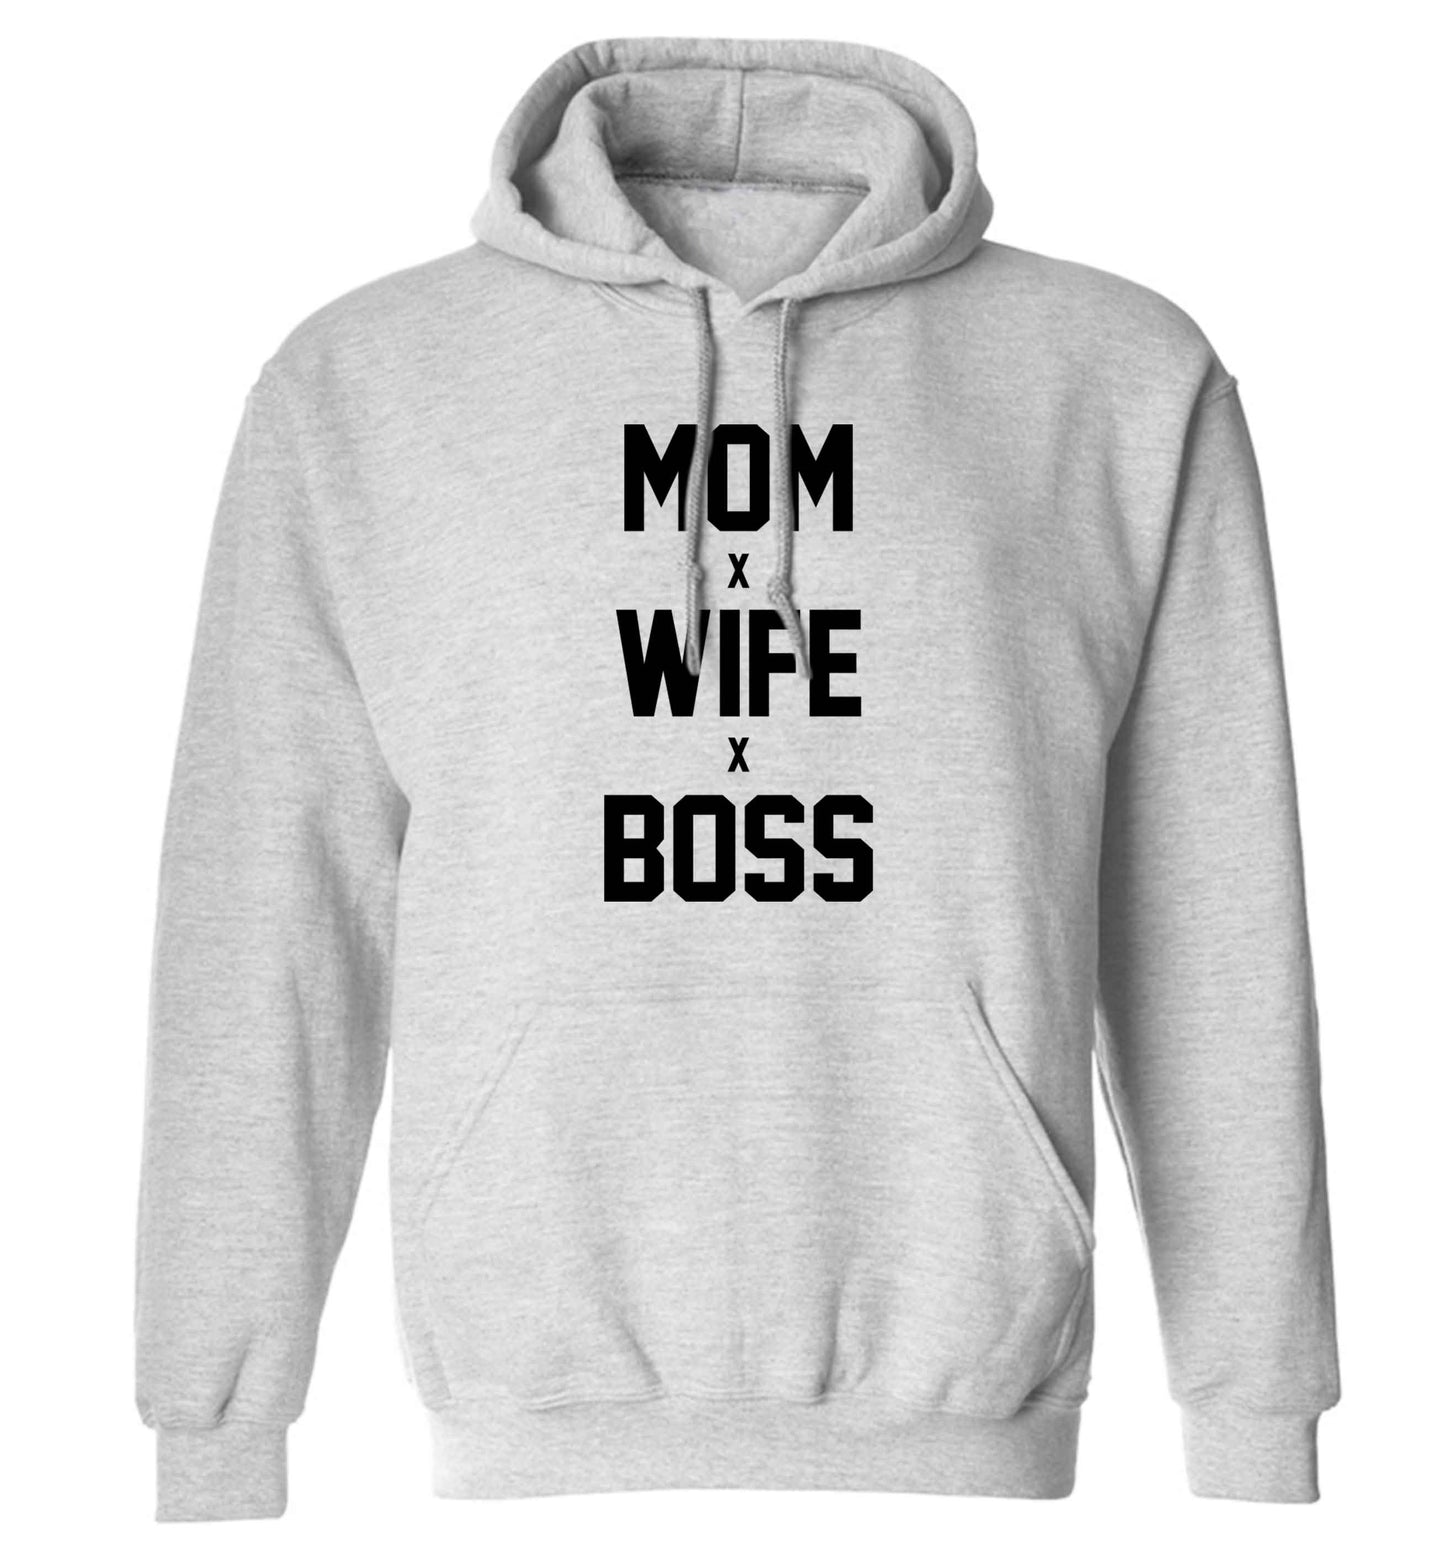 Mum wife boss adults unisex grey hoodie 2XL